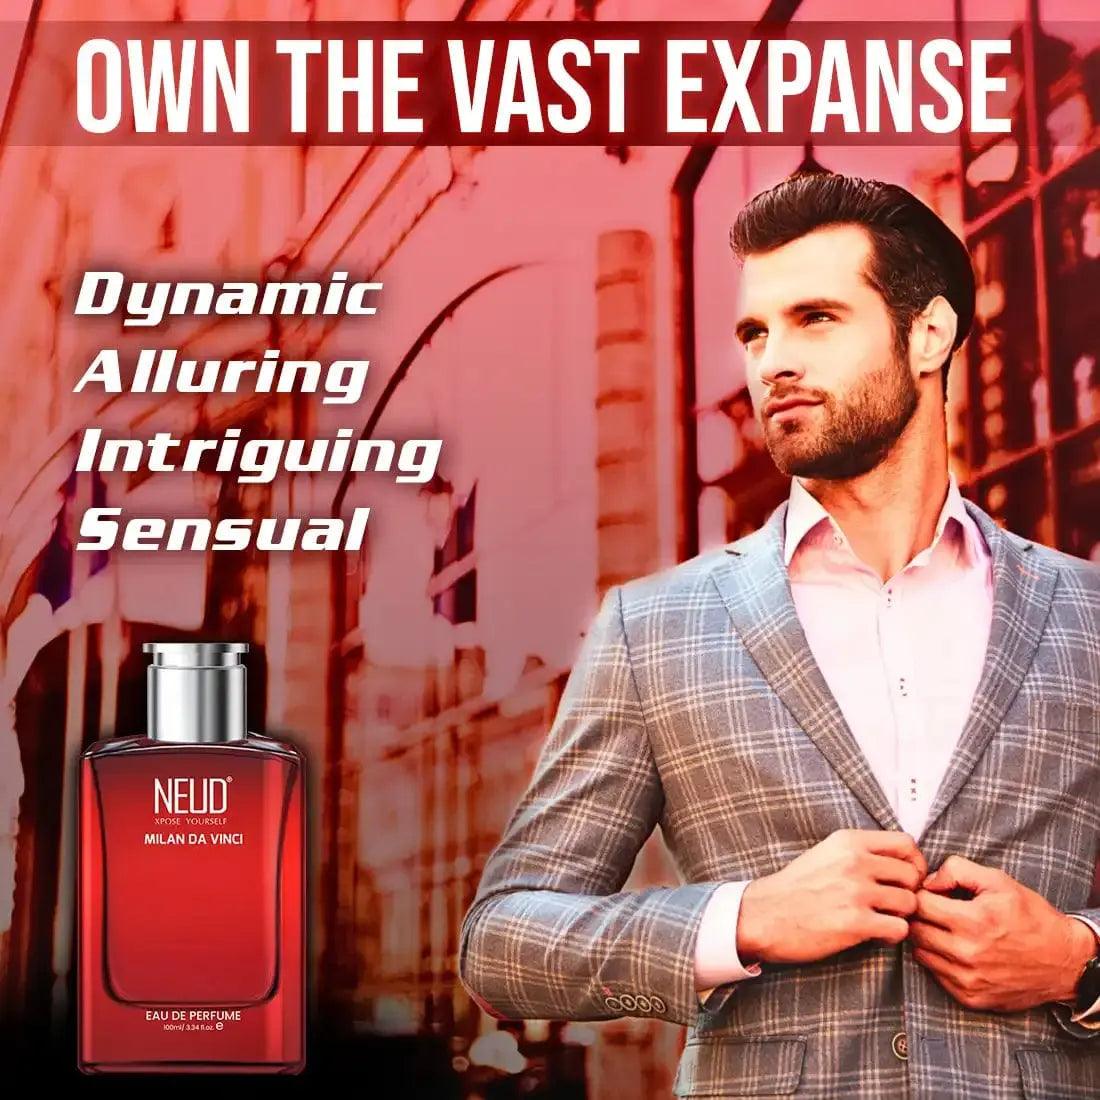 NEUD Milan Da Vinci Luxury Perfume for Cosmopolitan Men Is Dynamic, Alluring, Intriguing and Sensual